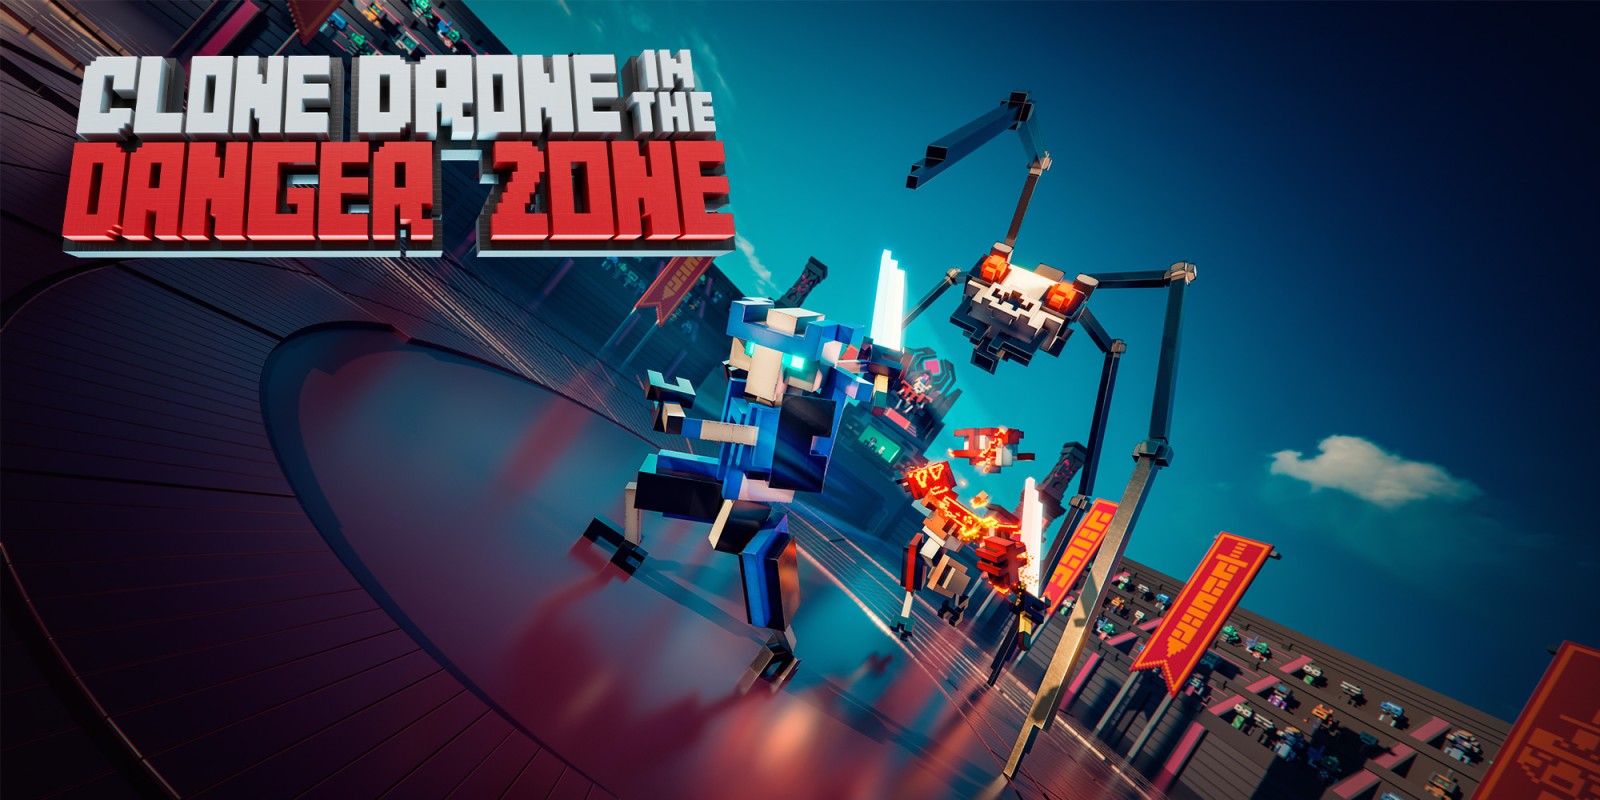 clone drone in the danger zone key